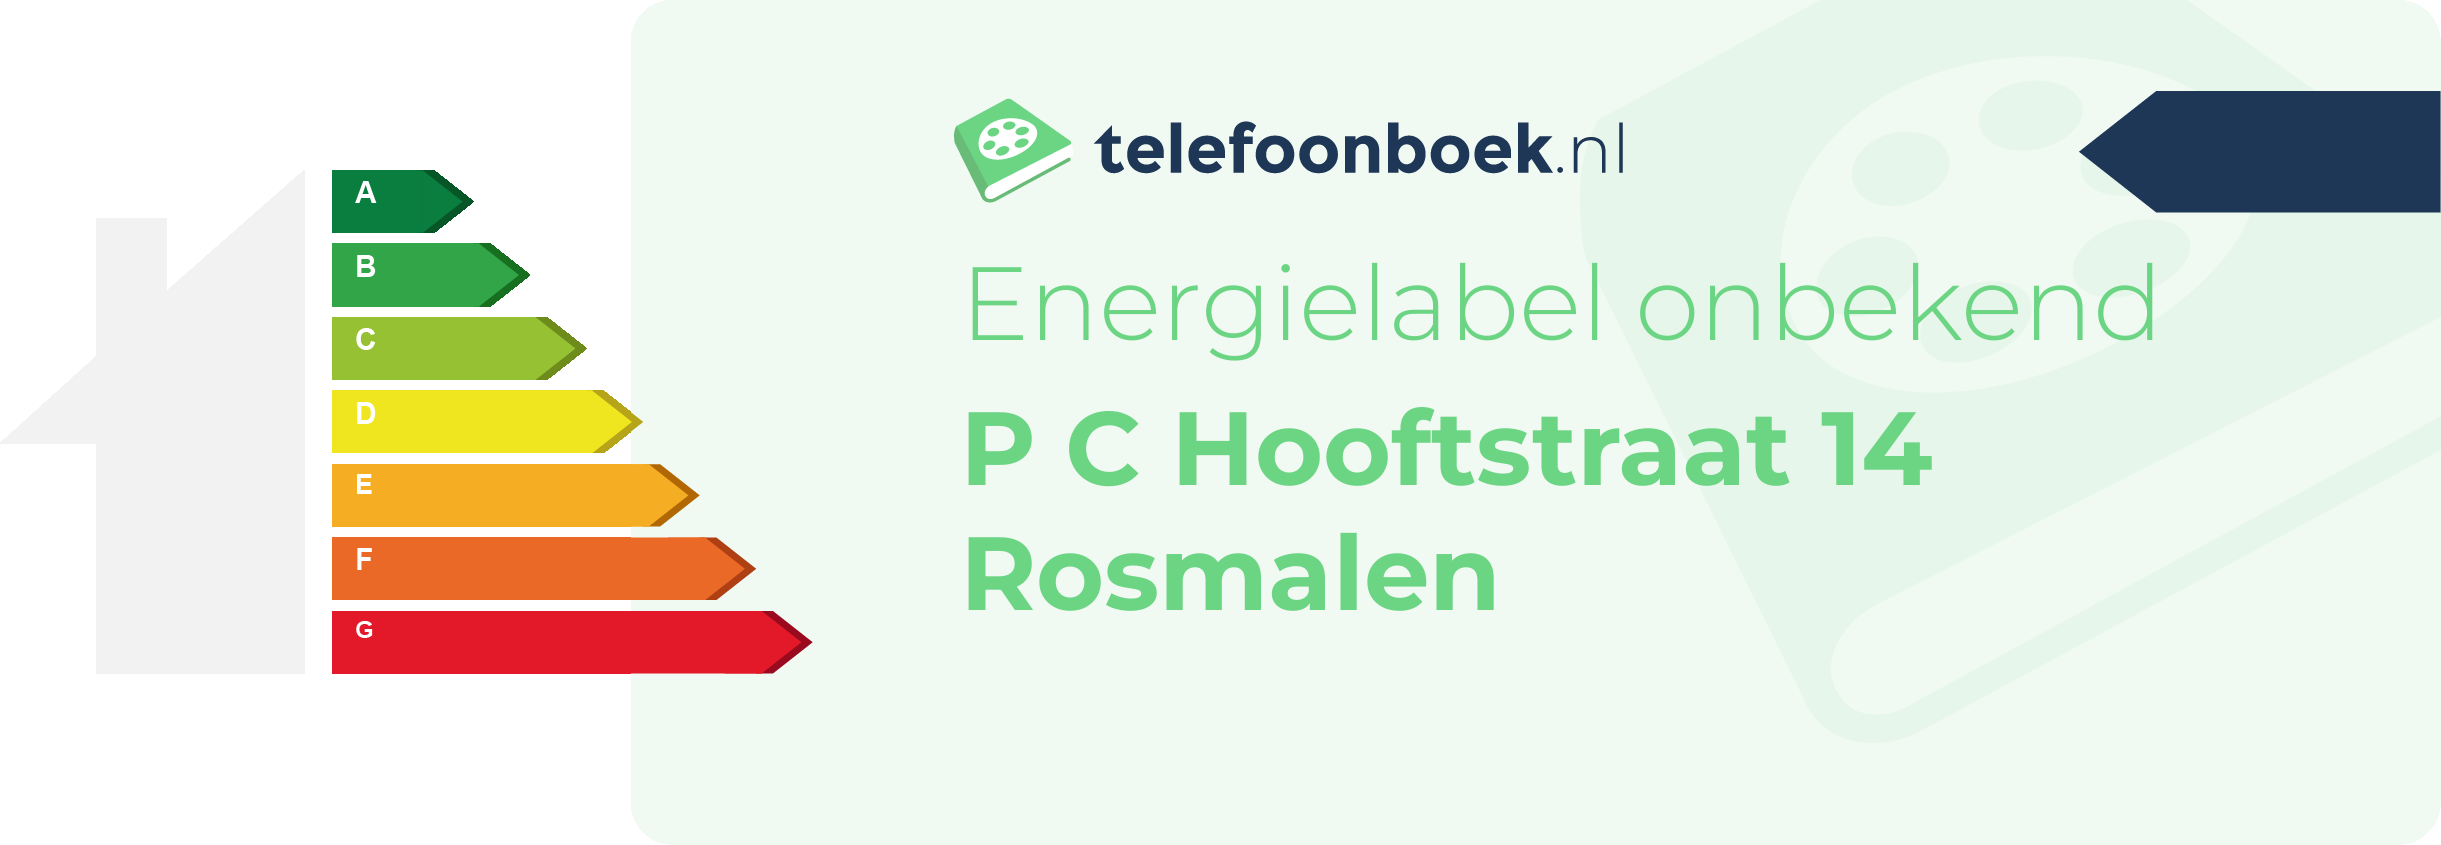 Energielabel P C Hooftstraat 14 Rosmalen